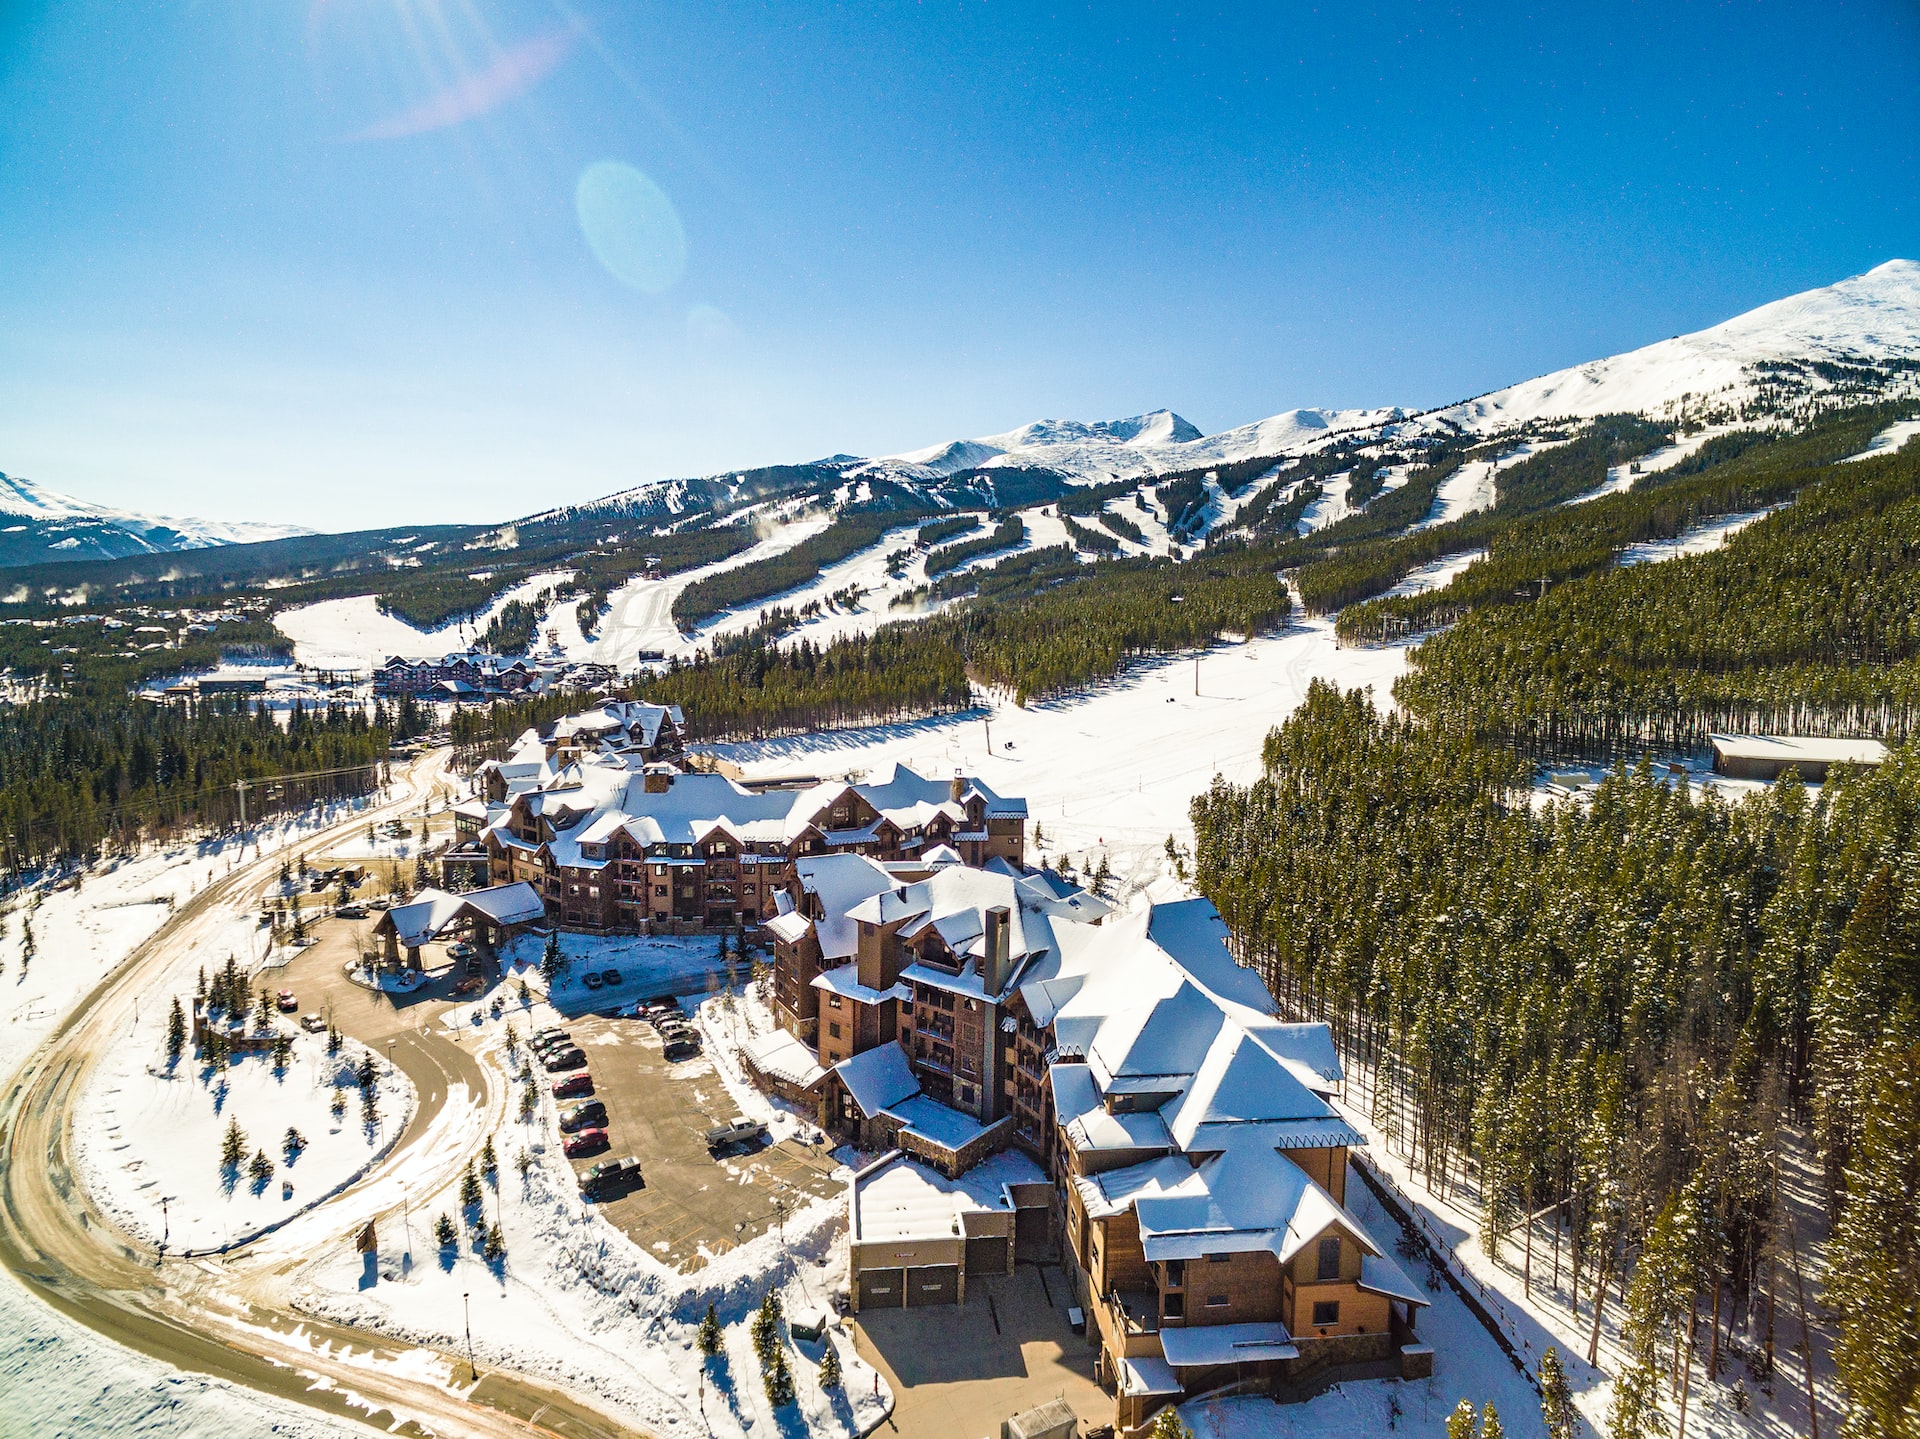 Aerial view of Breckenridge Ski Resort’s Peak 7 and Peak 8 in Colorado, USA.